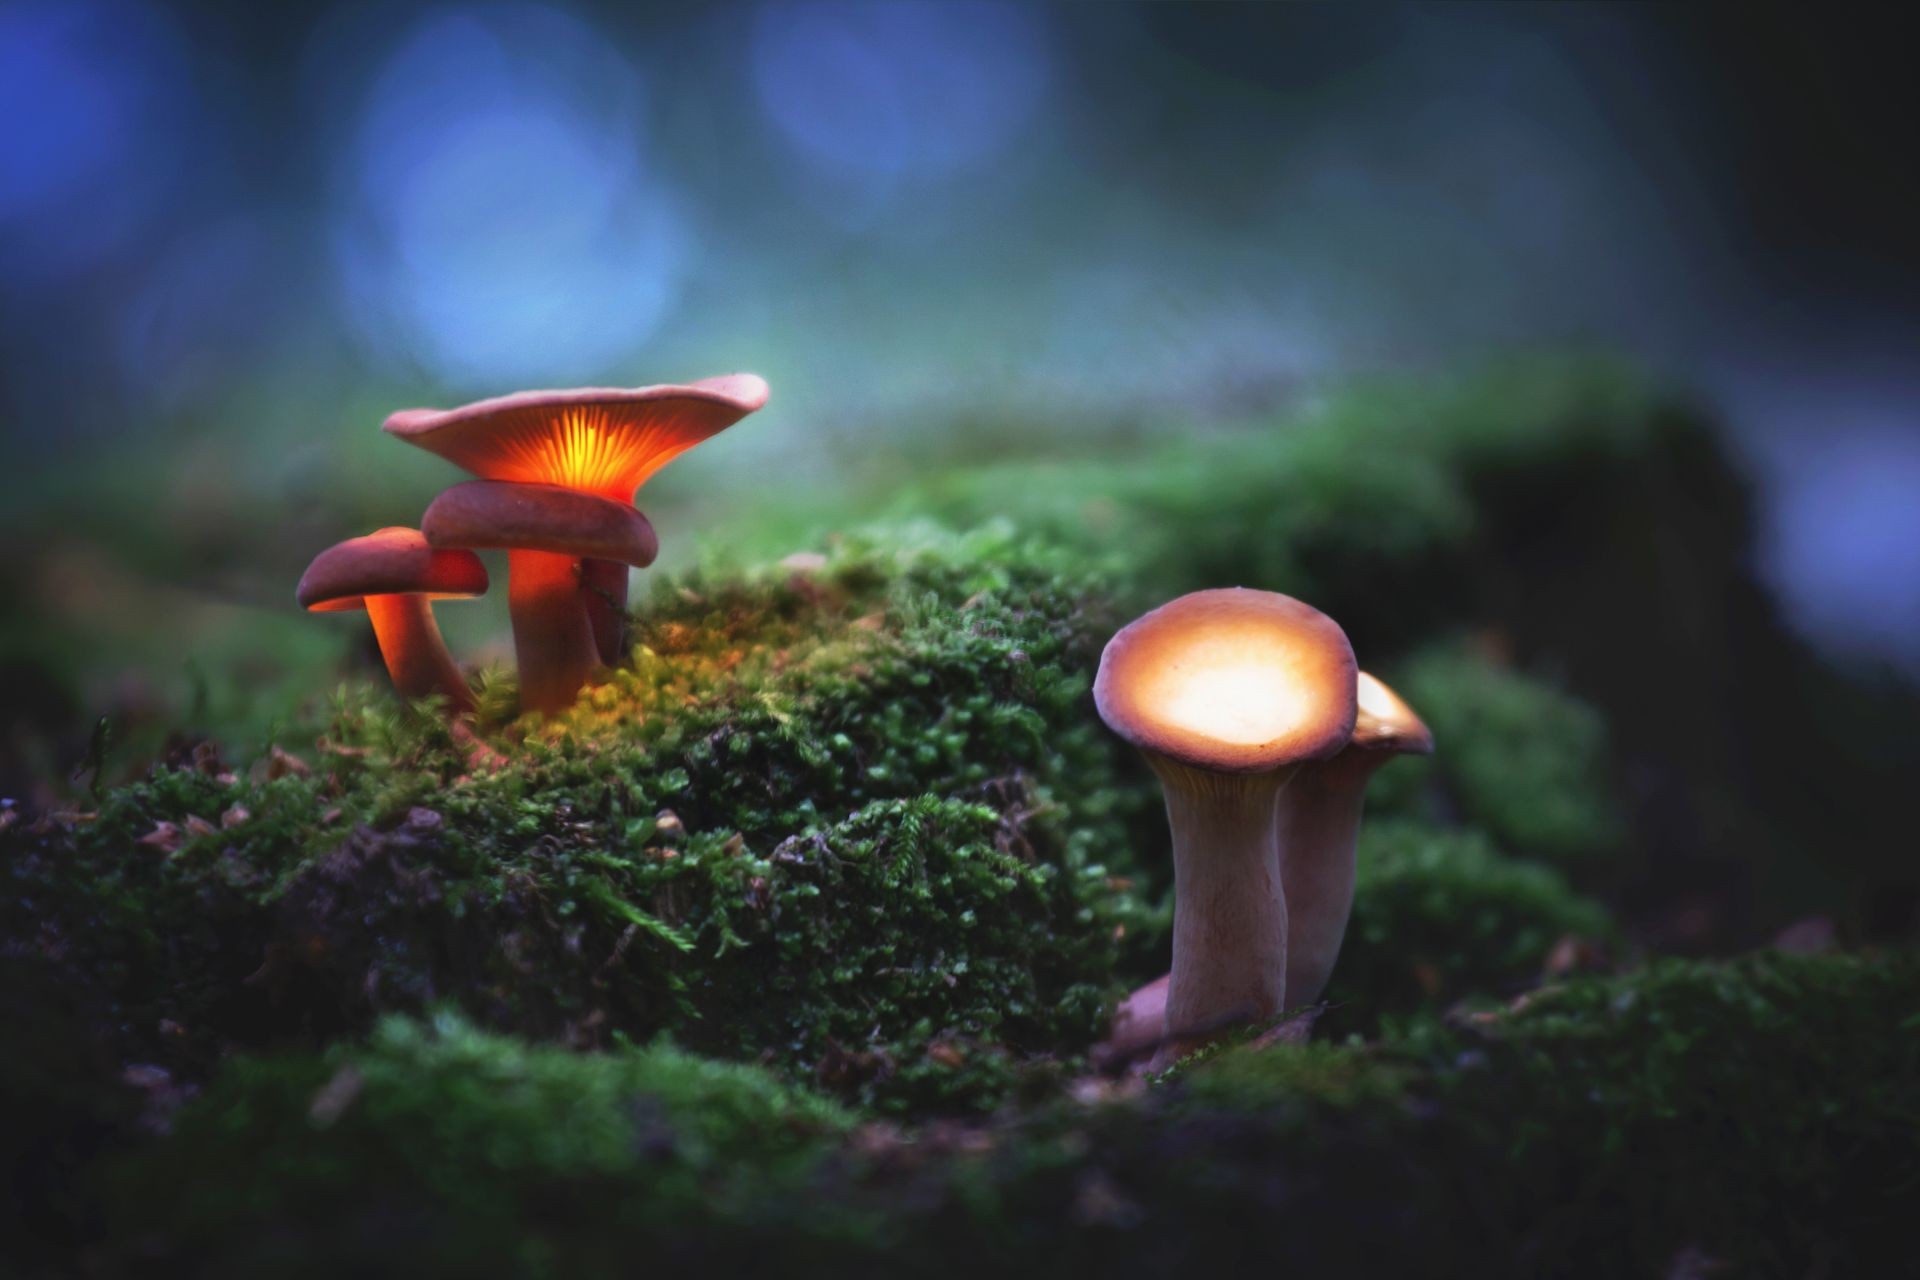 
Glowing, magic mushrooms in a dark forest